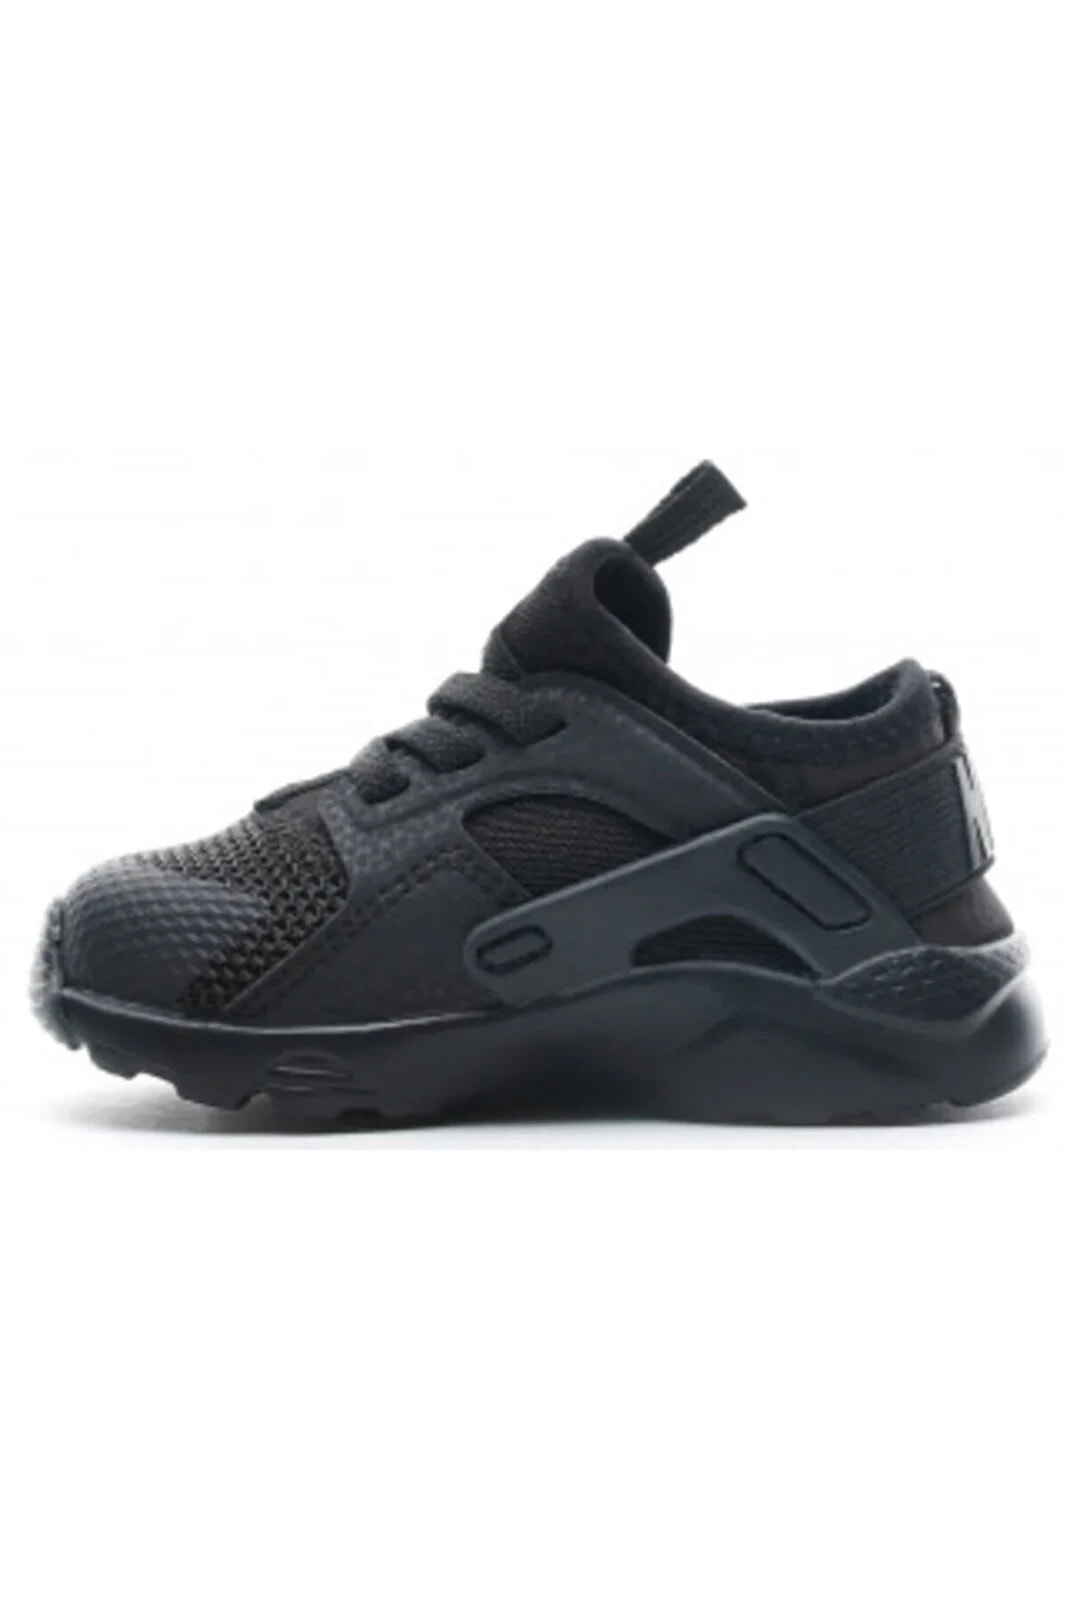 Huarache Run Ultra Çocuk Siyah Spor Ayakkabı